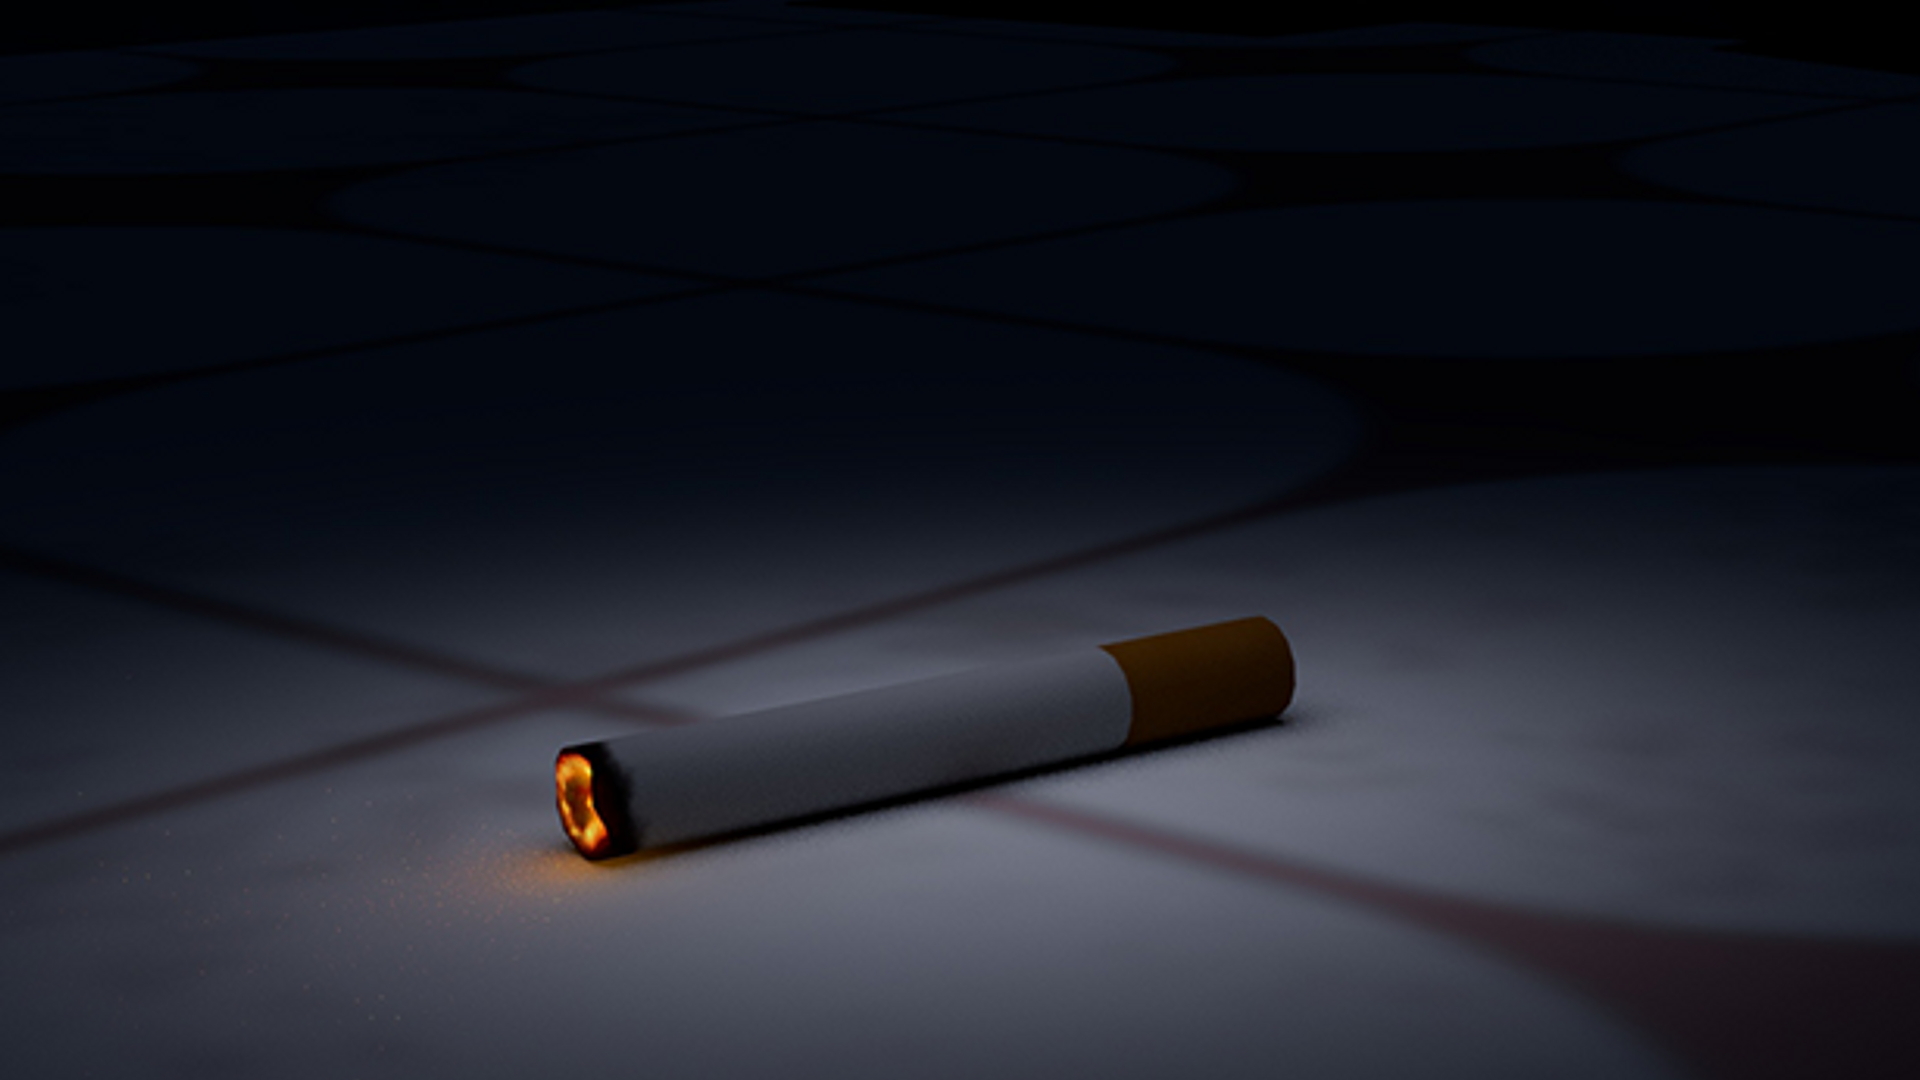 Project Suicide Cigarette